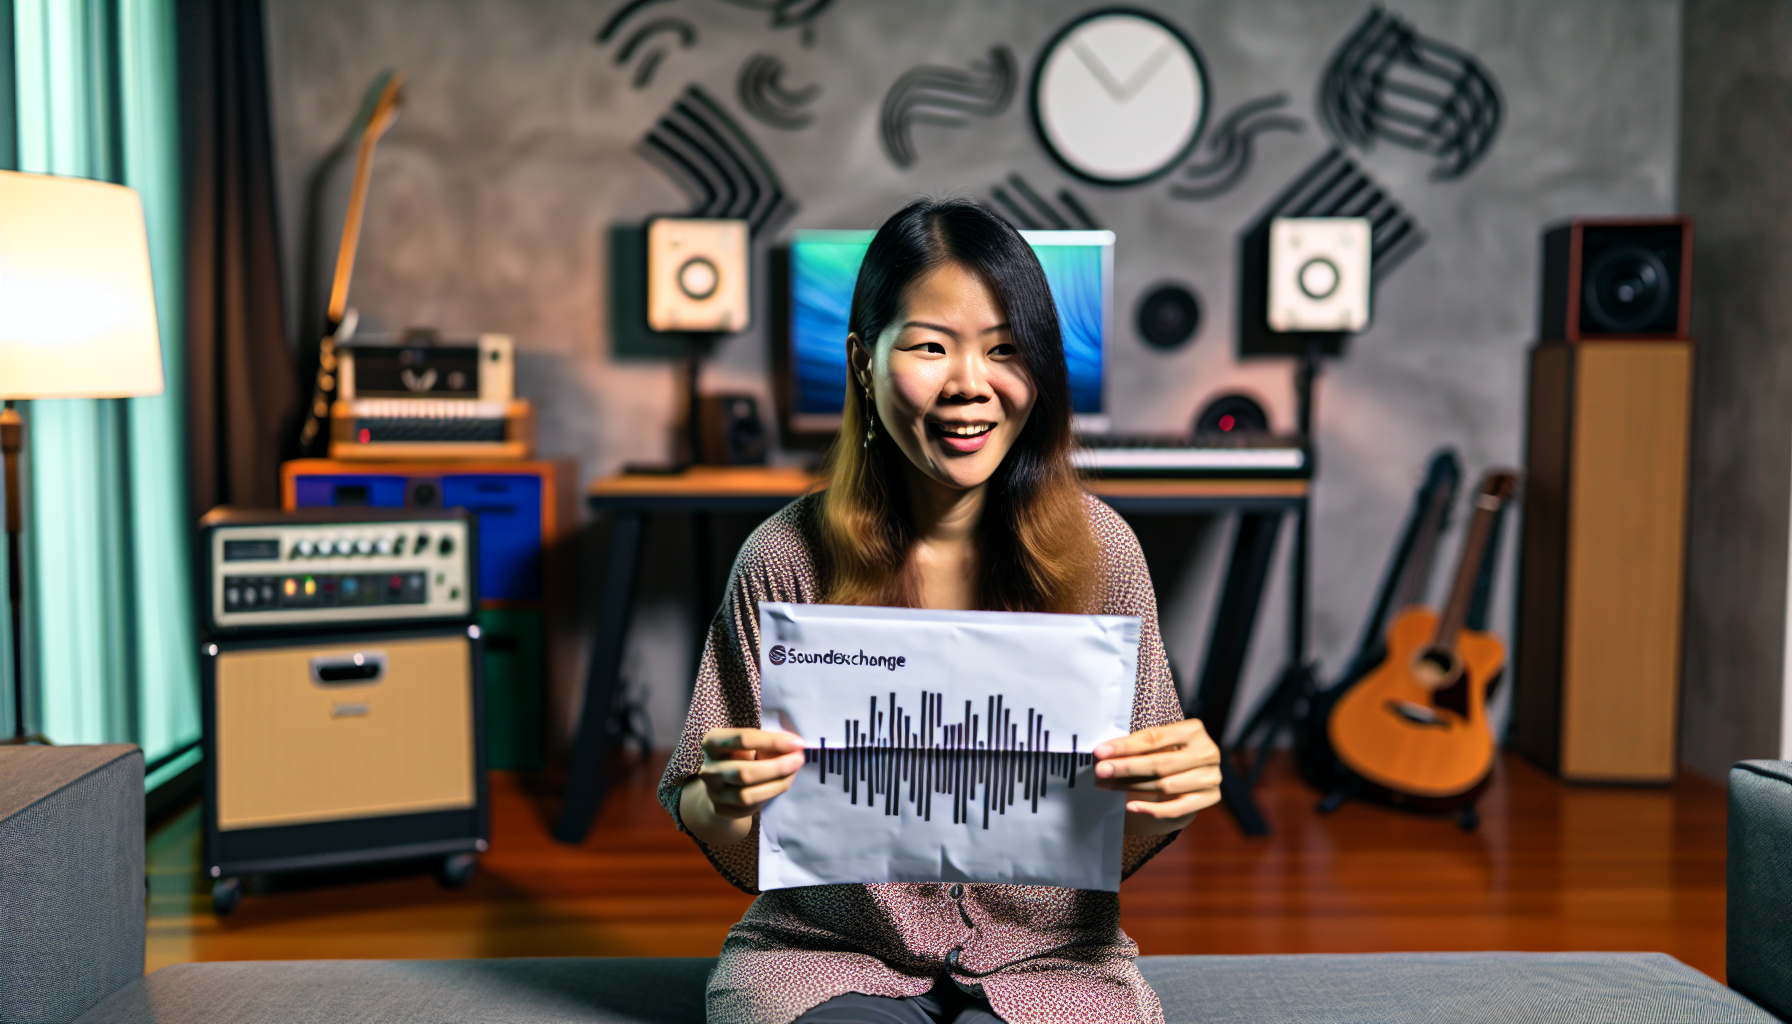 Music creator receiving digital performance royalties from SoundExchange